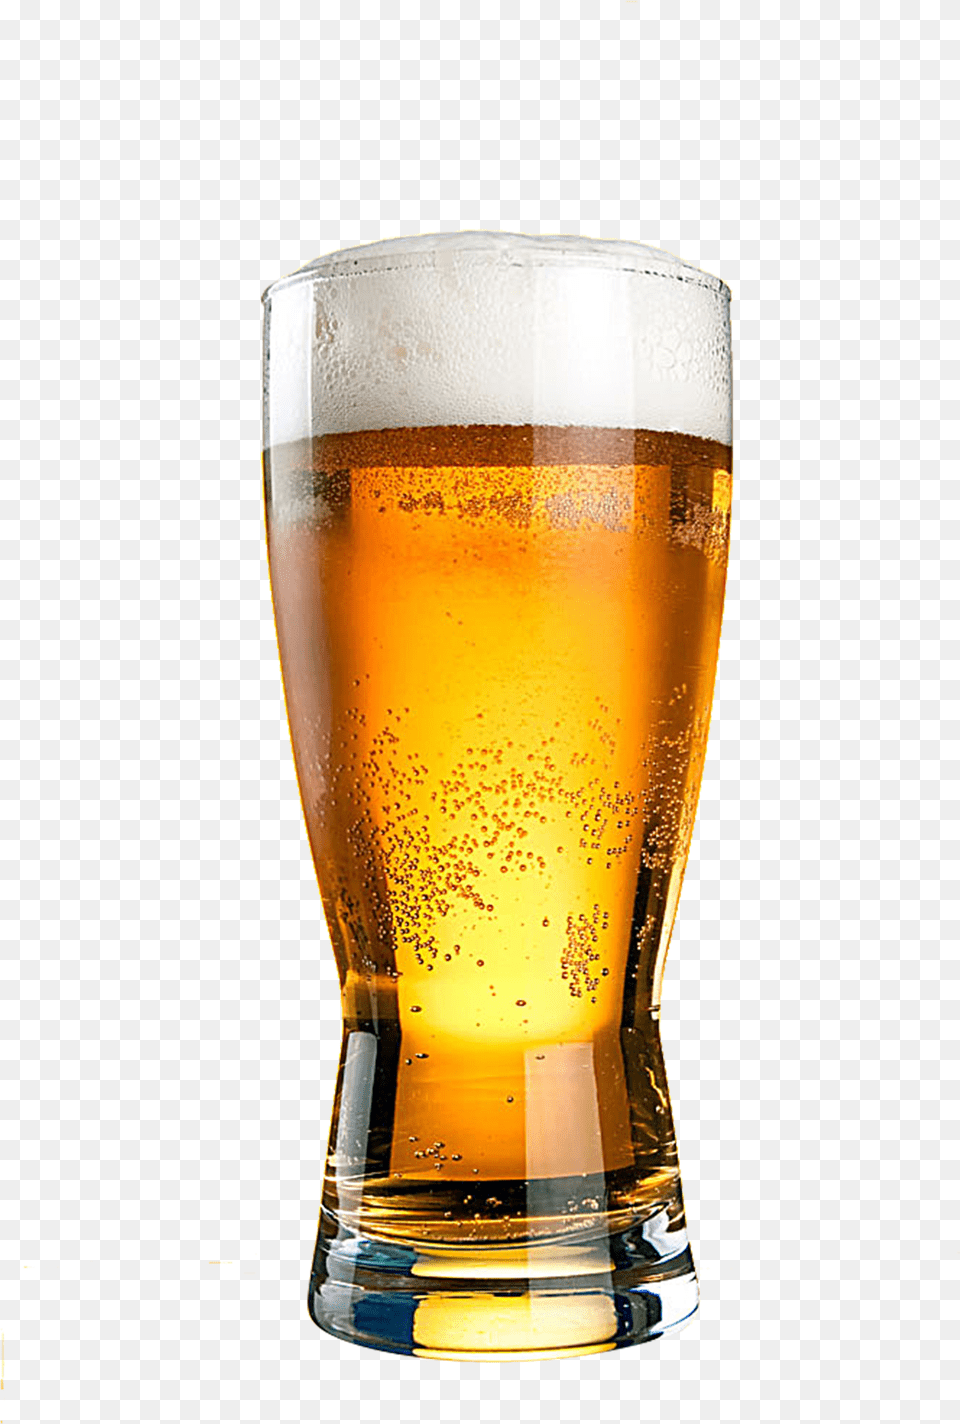 Transparent Background Beer Glass Free Download Glass Of Beer, Alcohol, Beer Glass, Beverage, Liquor Png Image